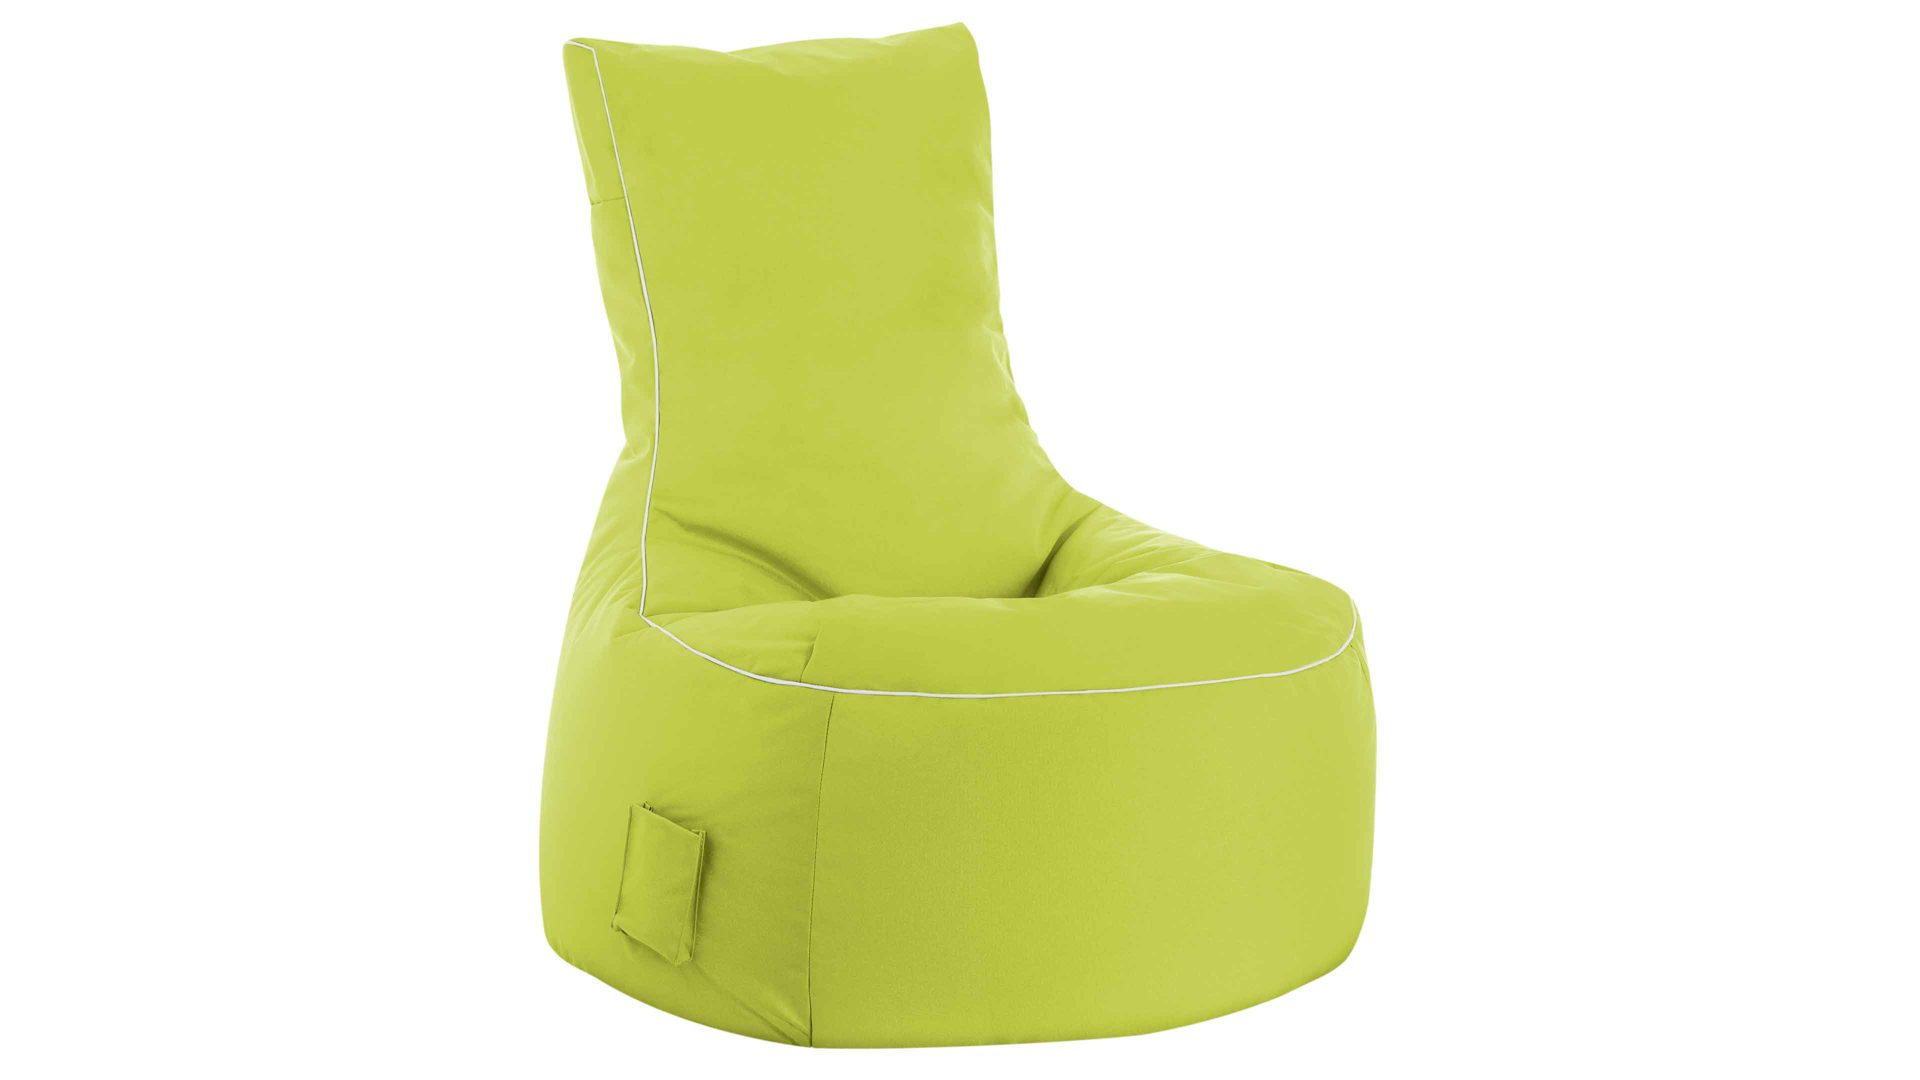 Sitzsack-Sessel Magma sitting point aus Kunstfaser in Hellgrün SITTING POINT Sitzsack-Sessel swing scuba® grüne Kunstfaser - ca. 95 x 90 x 65 cm